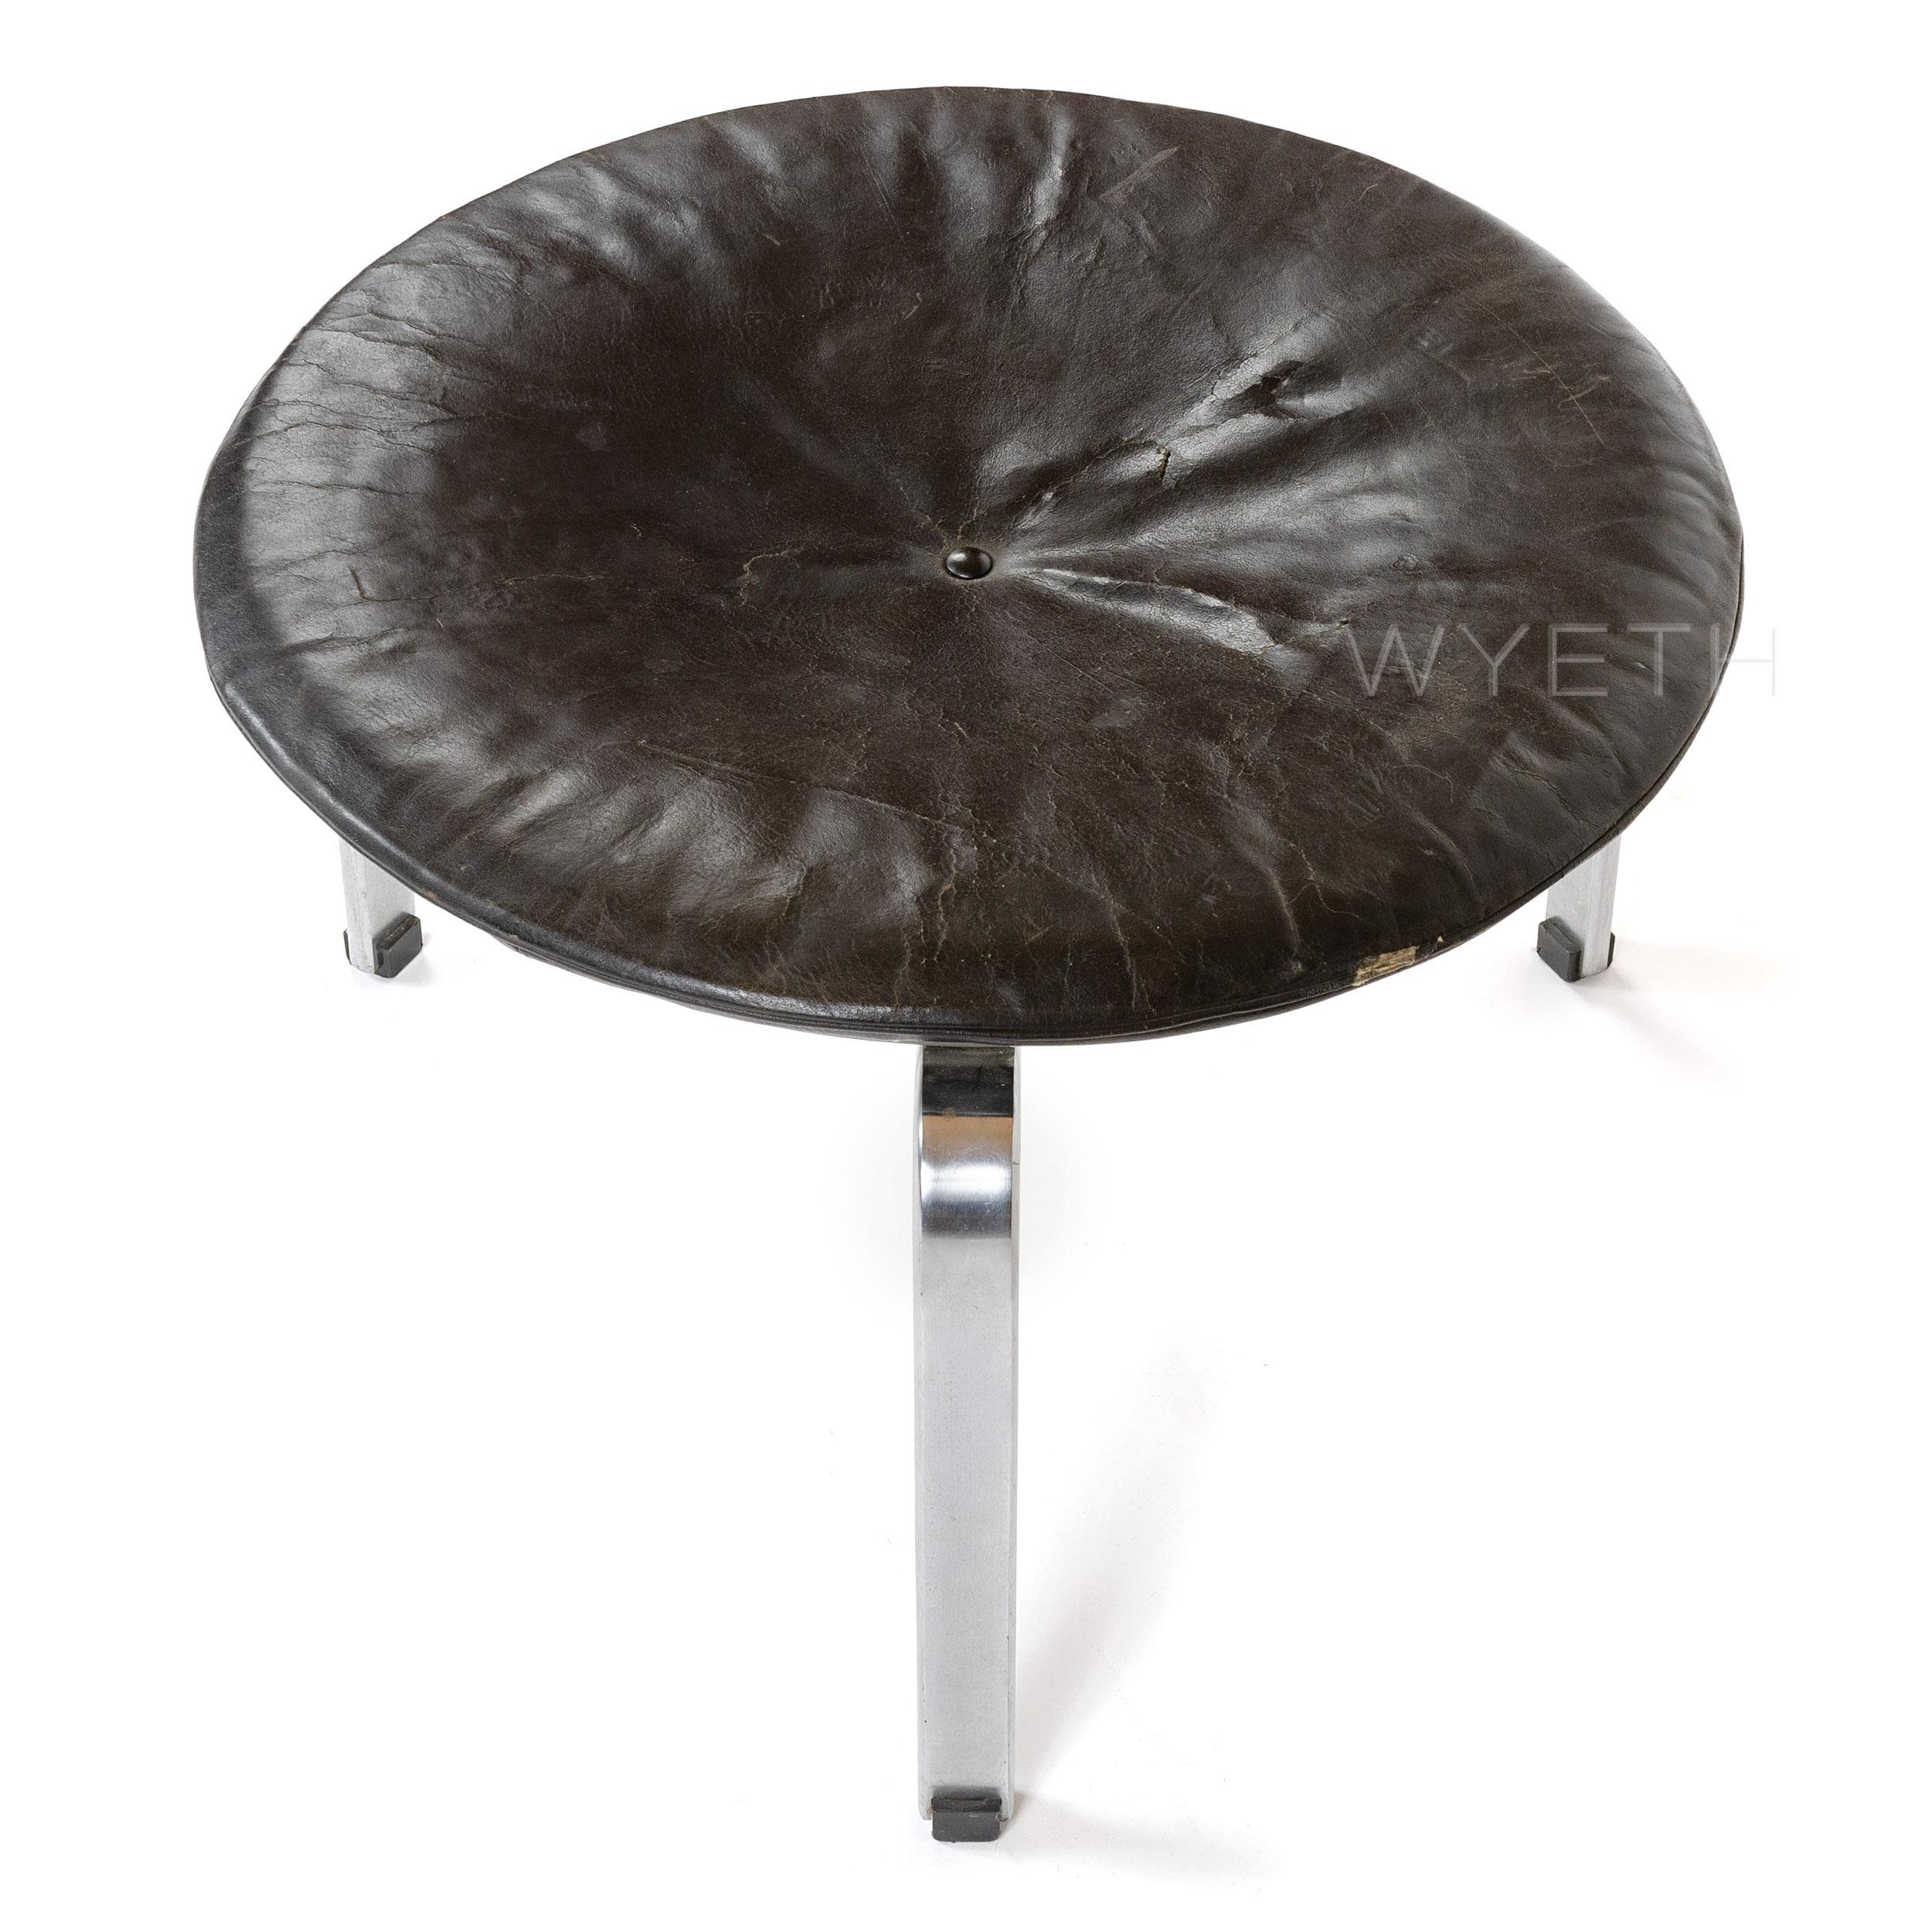 An early 'PK-33' stool, with a round black leather cushion on three satin-chromed flat bar legs. Maker's mark on underside.